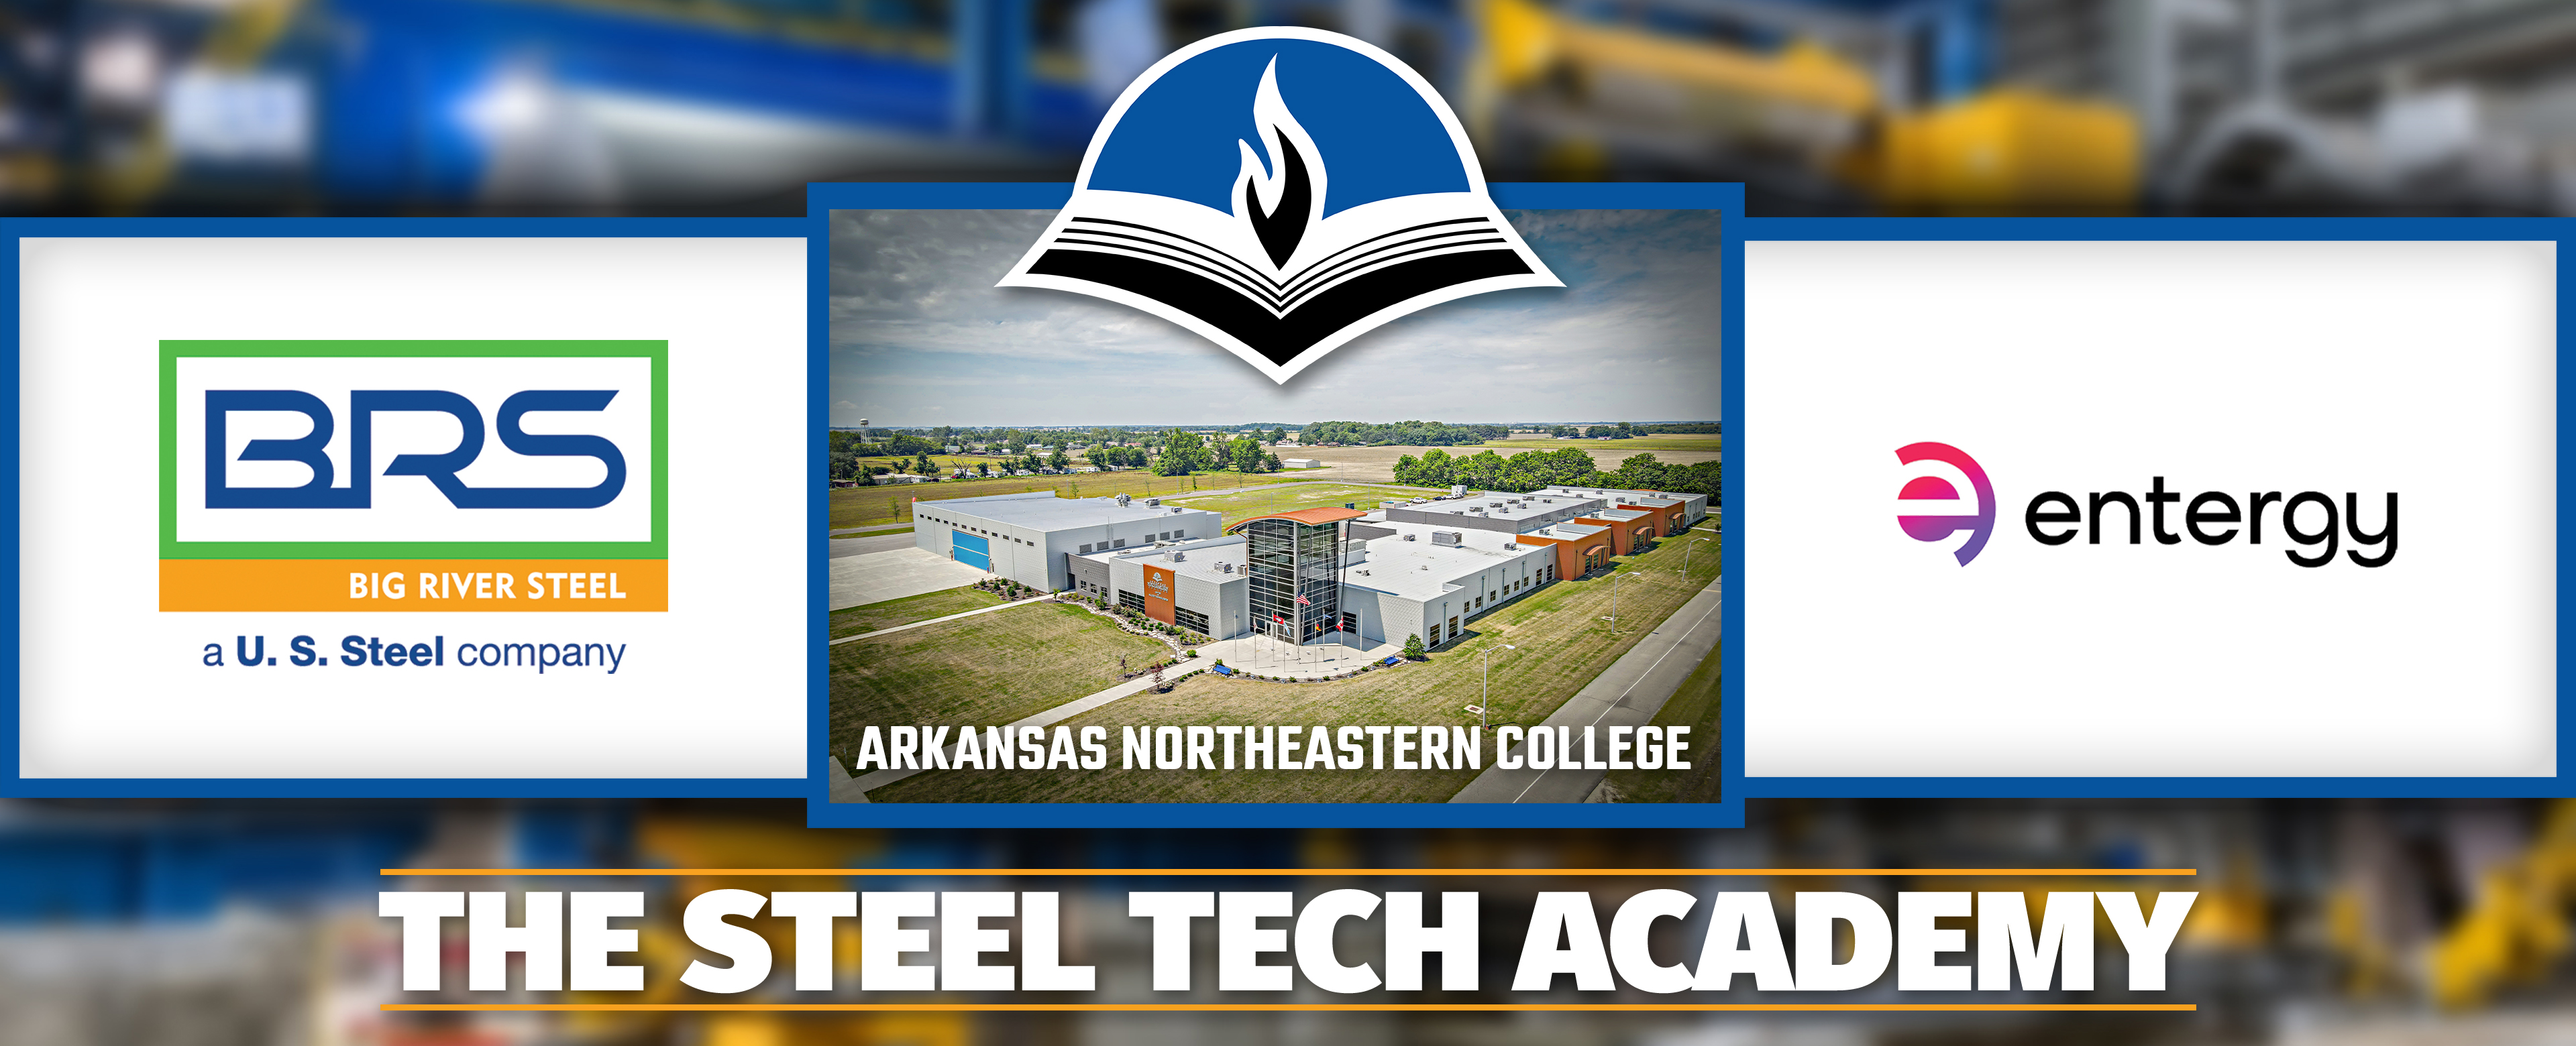 The Steel Tech Academy